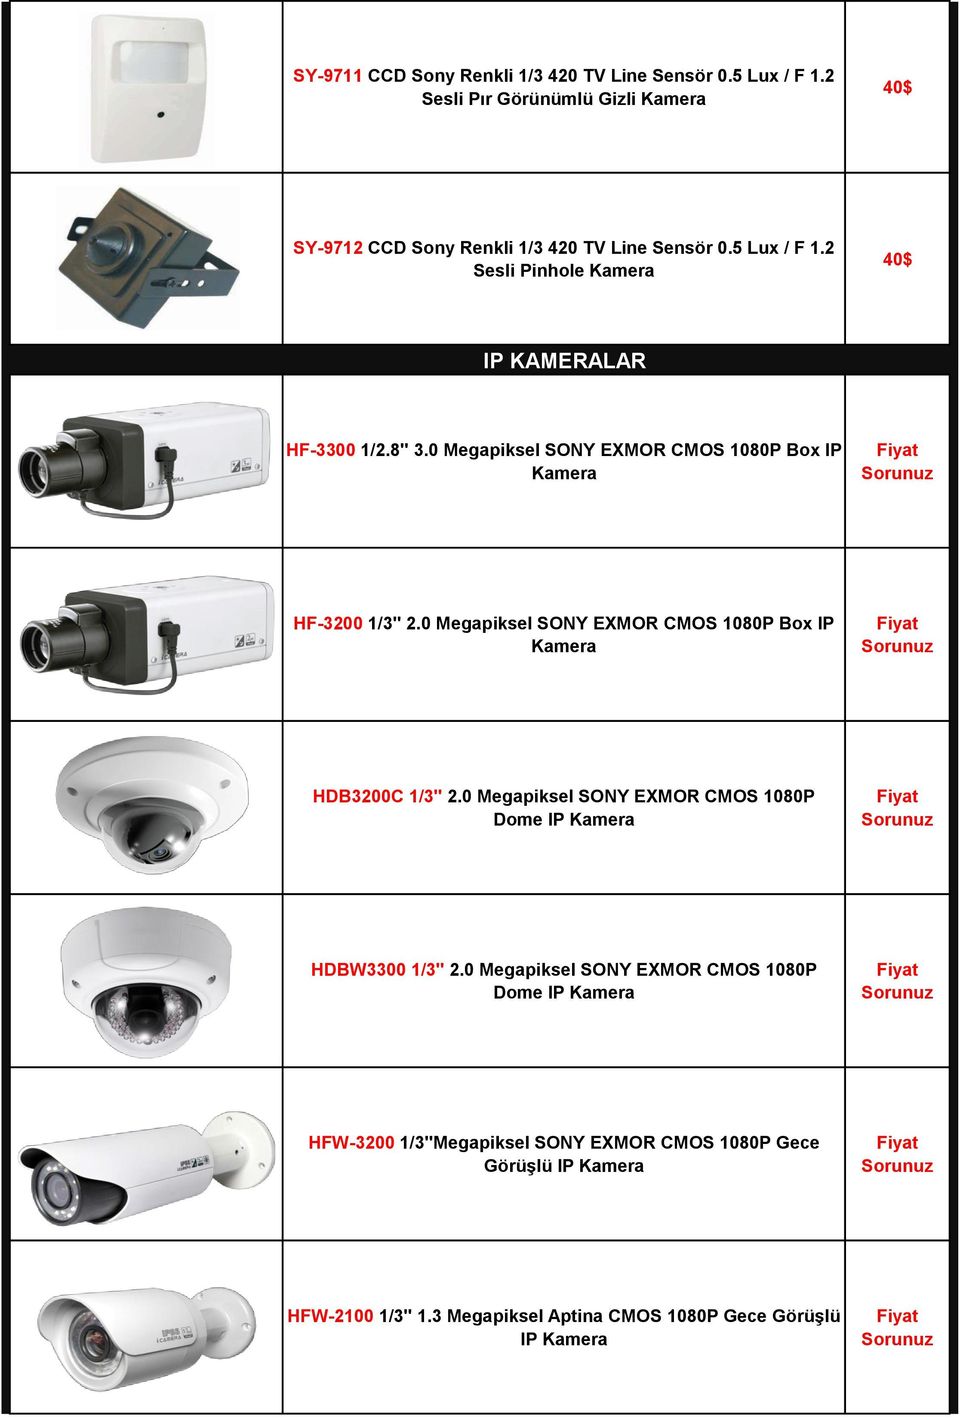 0 Megapiksel SONY EXMOR CMOS 1080P Box IP Kamera HDB3200C 1/3'' 2.0 Megapiksel SONY EXMOR CMOS 1080P Dome IP Kamera HDBW3300 1/3'' 2.